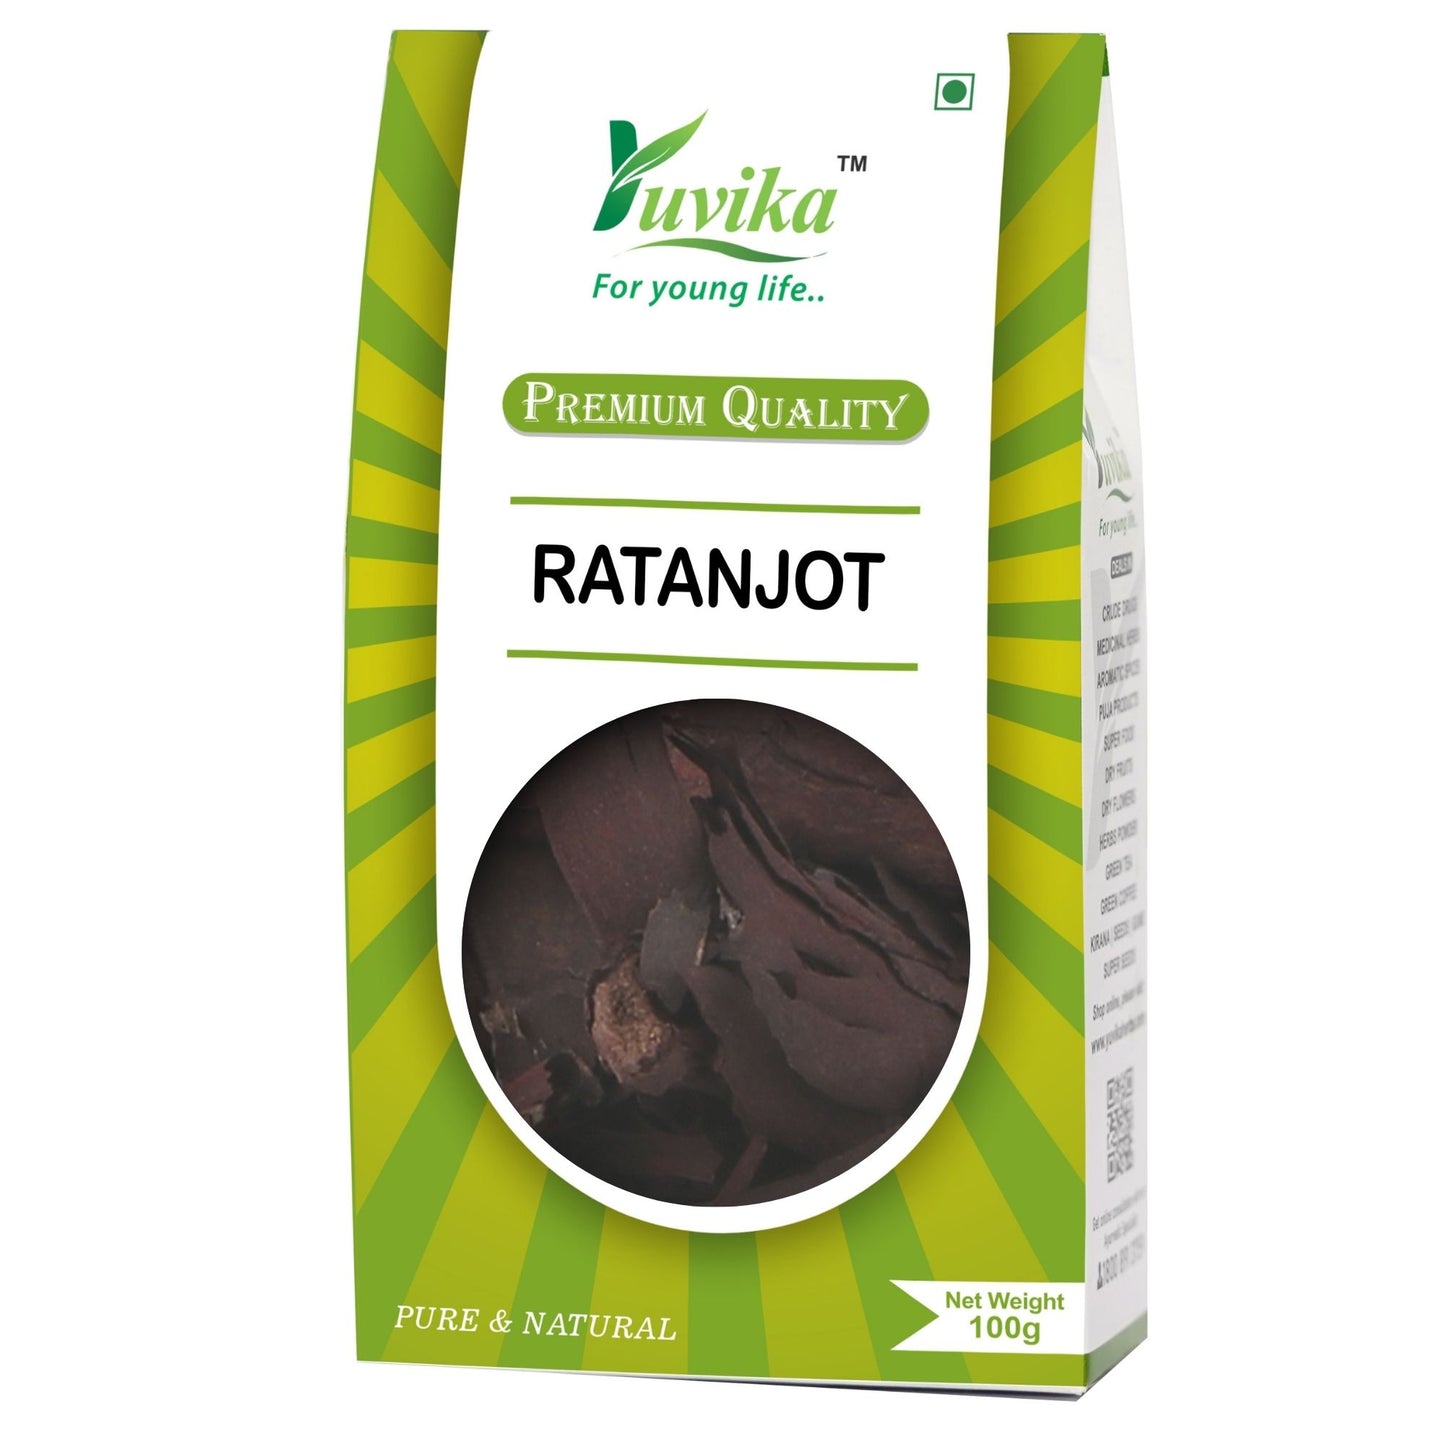 Ratanjot - Onosma echioides - Alkanna Tinctoria - Alkanet Root (100g)